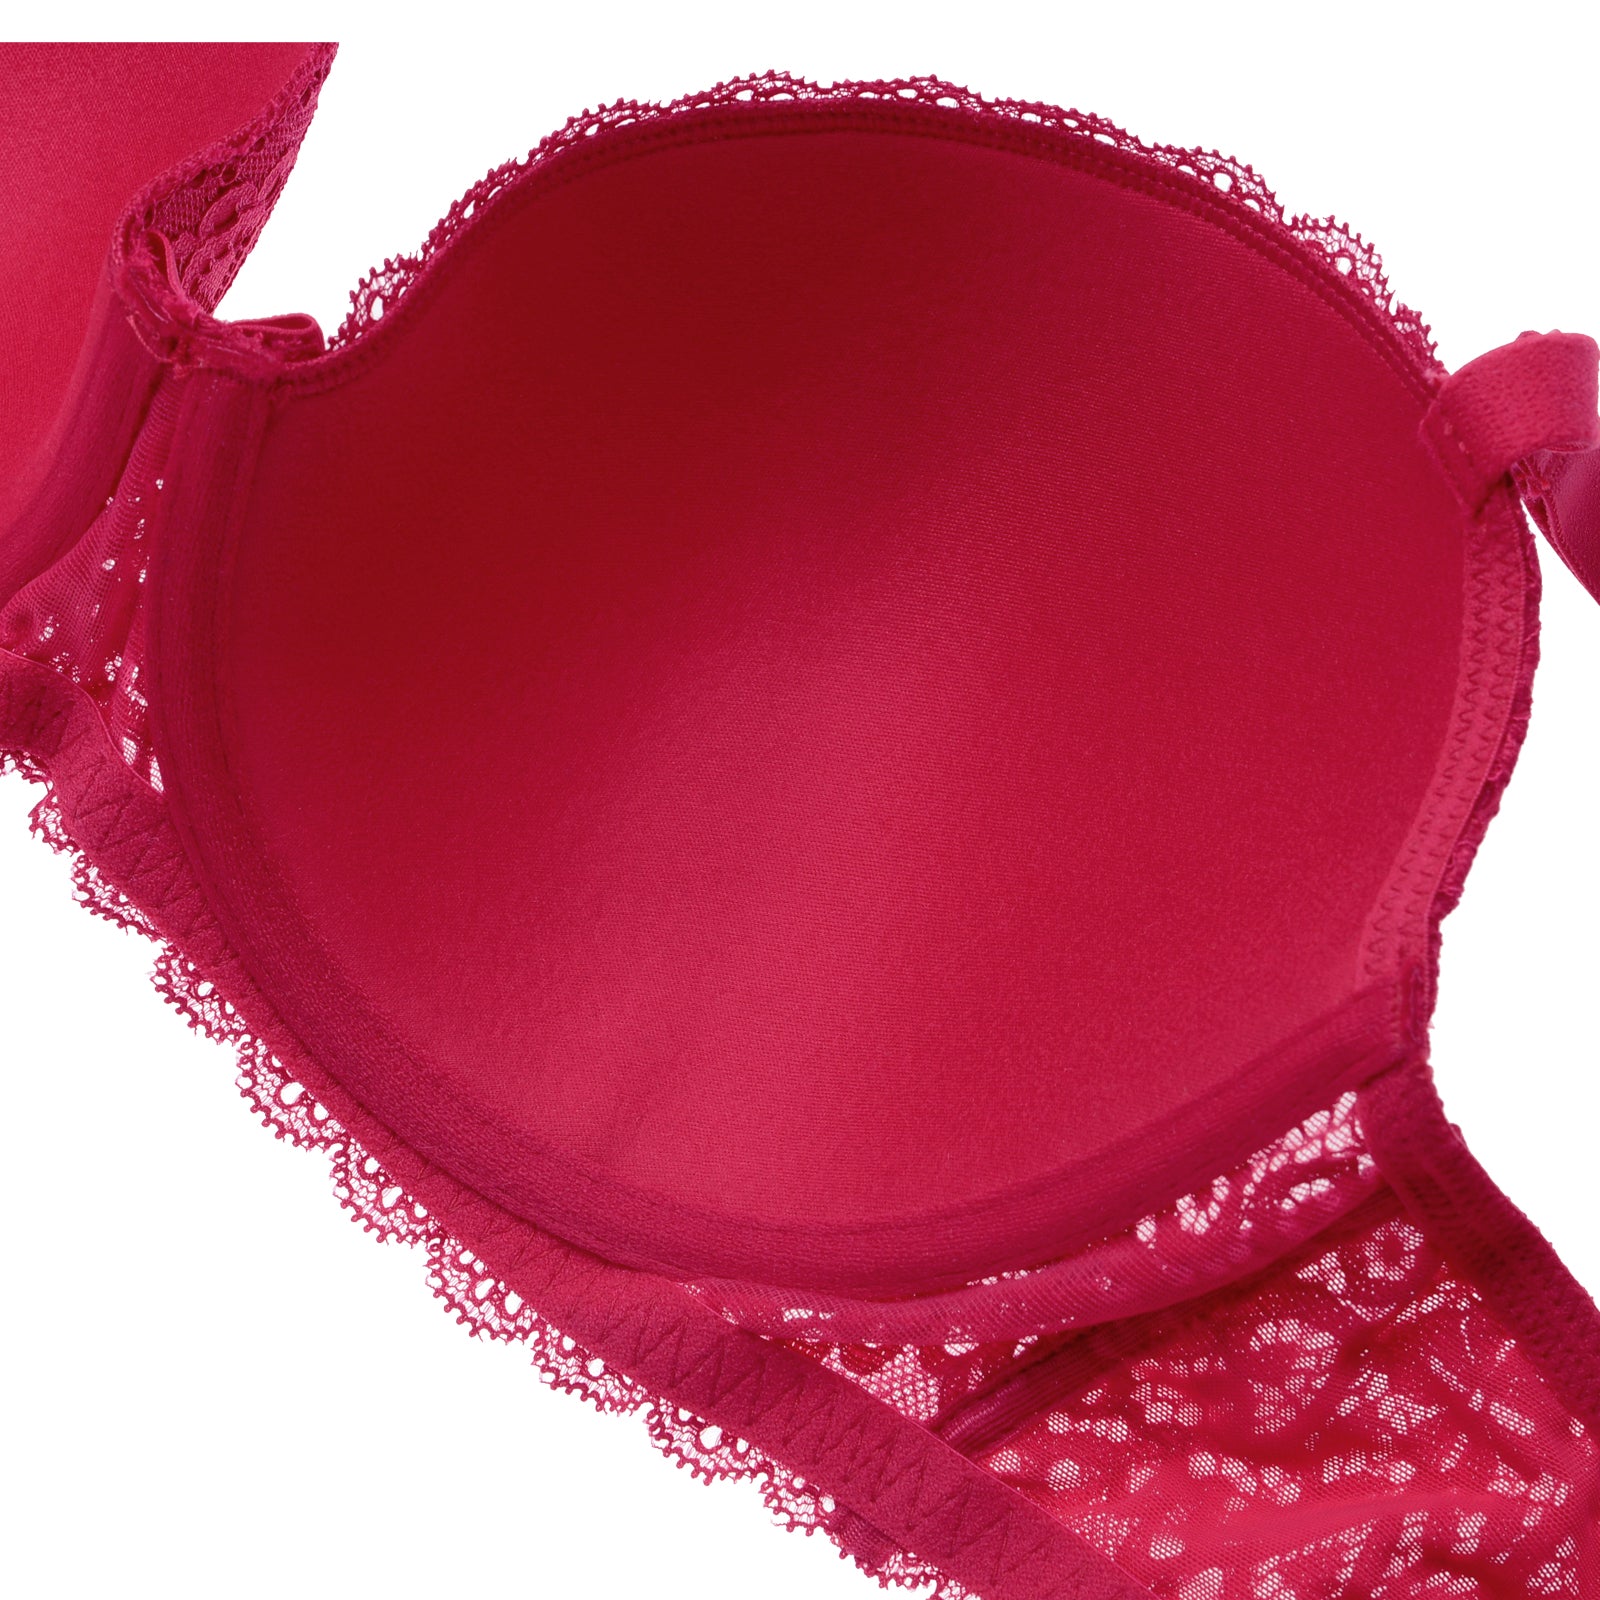 LIQQY Women's Plus Size Bra Curvy Signature Lace Push-up with